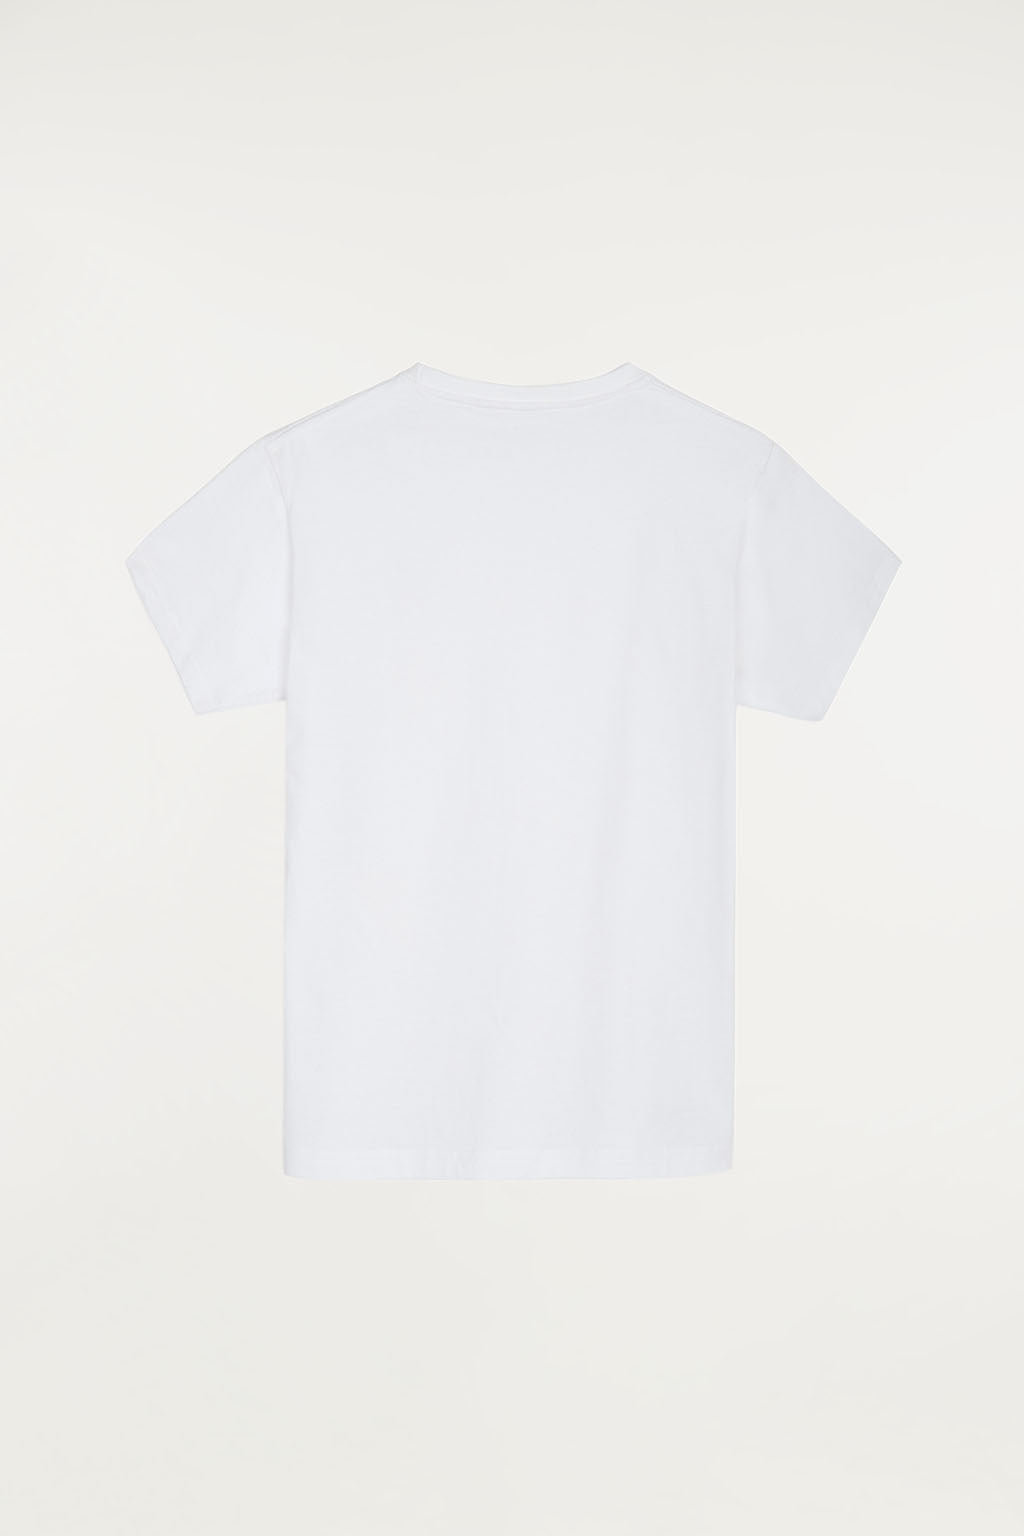 Camiseta blanca con pequeño logo bordado | NIÑOS | POLO CLUB